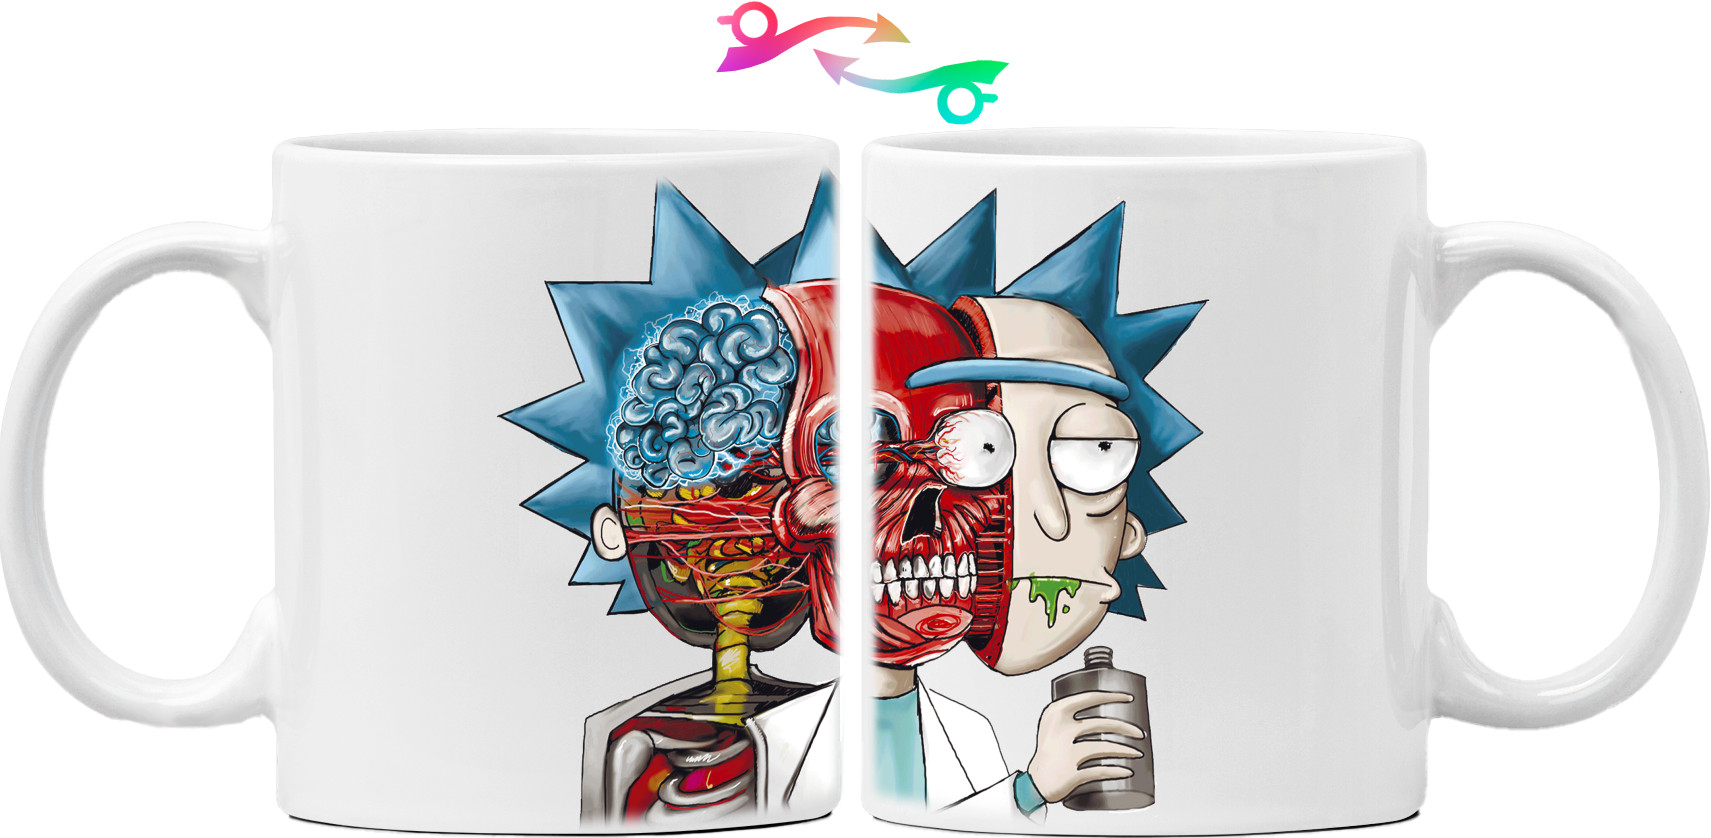 Rick-and-Morty-art